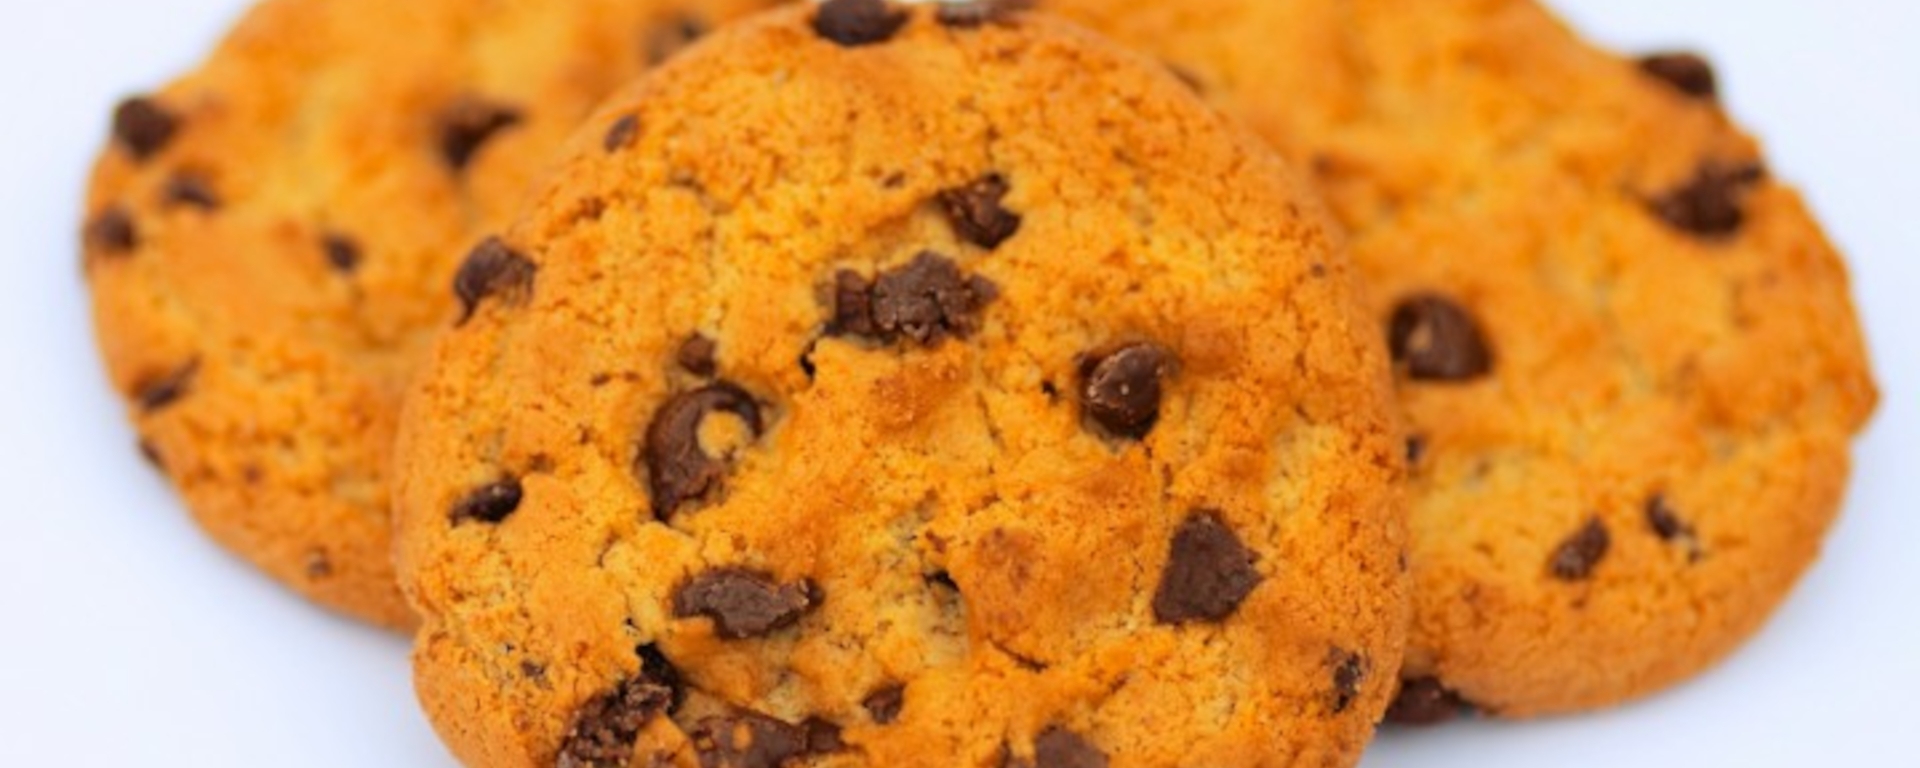 LuvMyRecipe.com - Egg-free & Grain Free Peanut Butter Choc Chip Cookies Featured